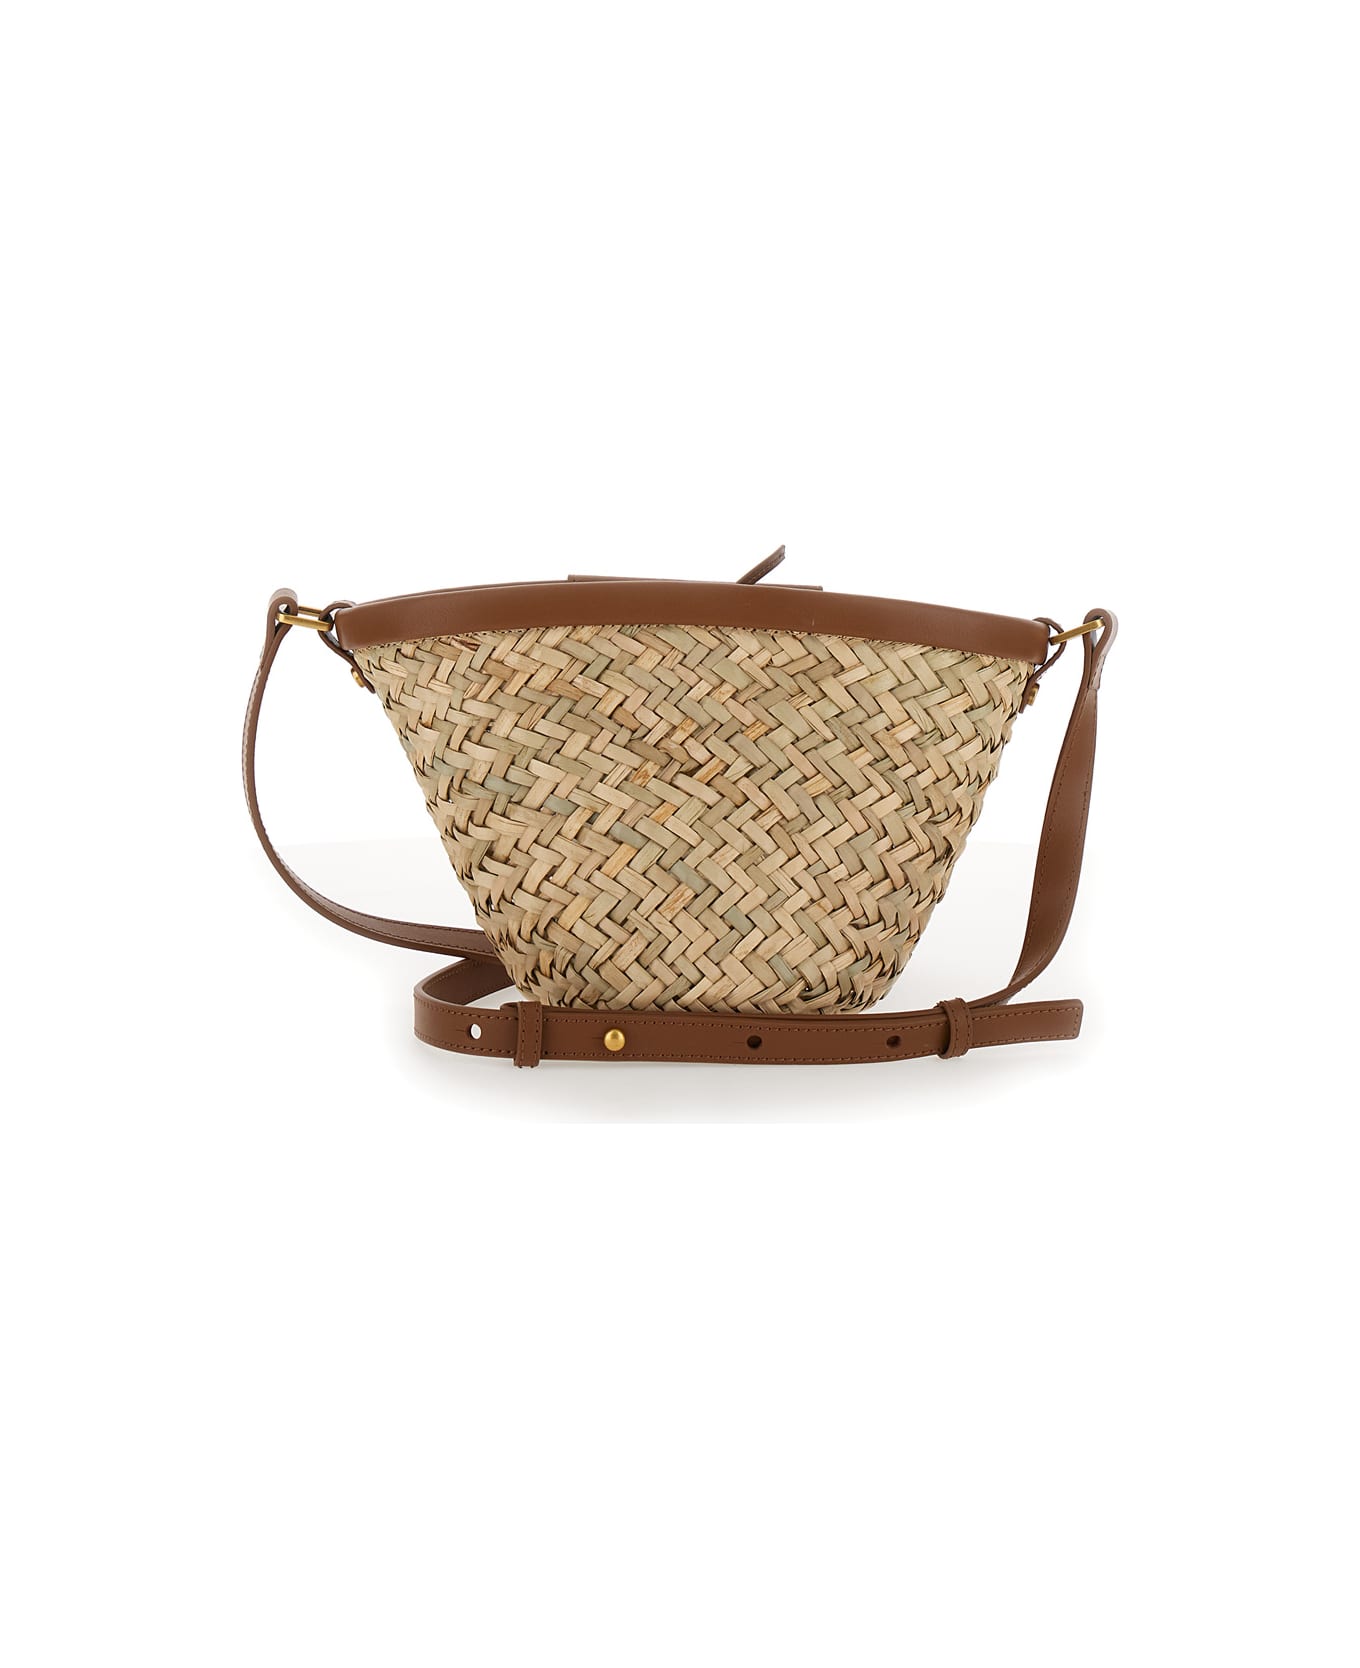 Pinko 'love Summer' Beige Bucket Bag In Raffa Woman - Naturale/cuoio-antique gold